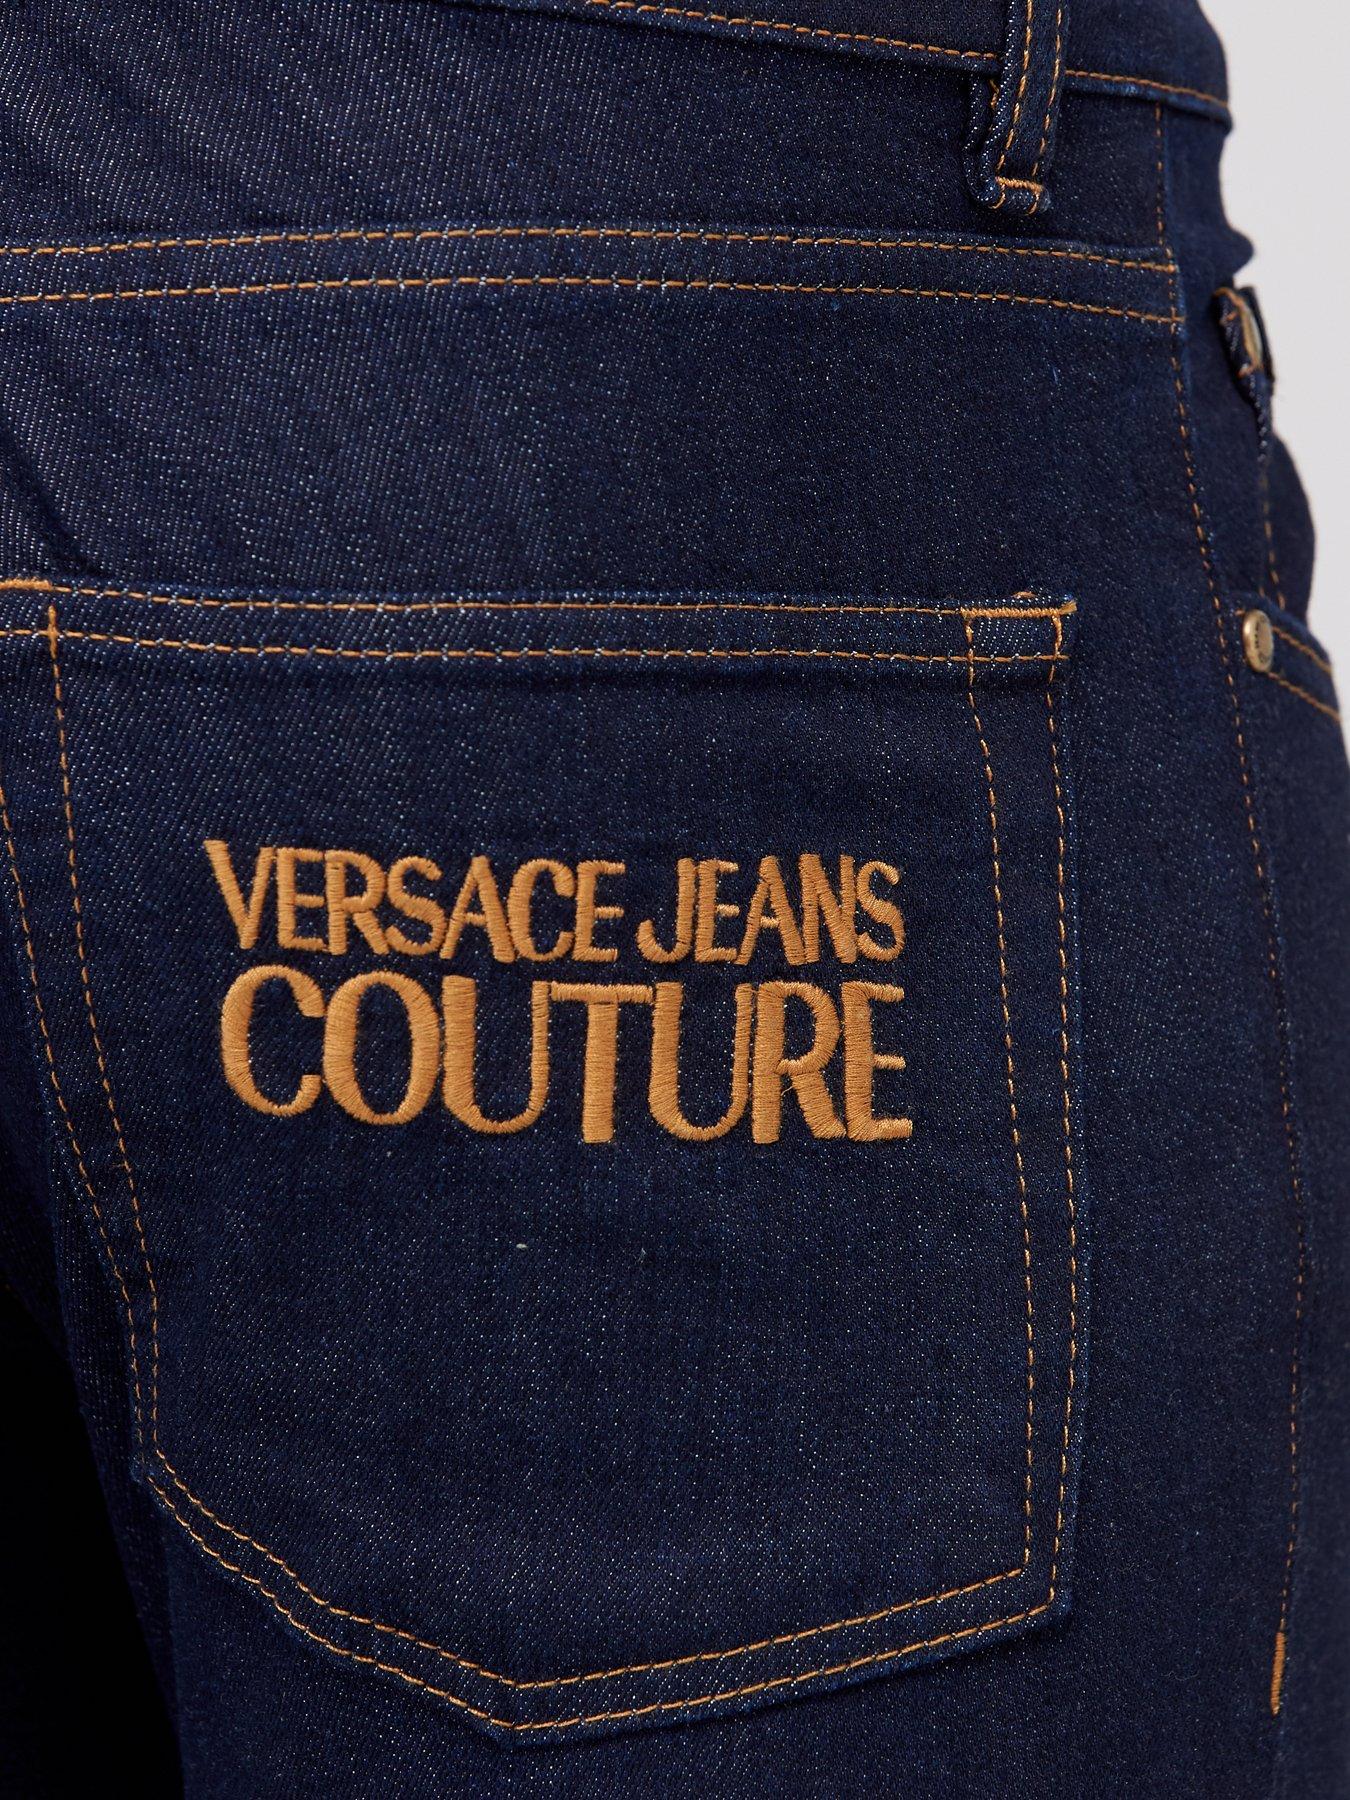 versace jeans mens